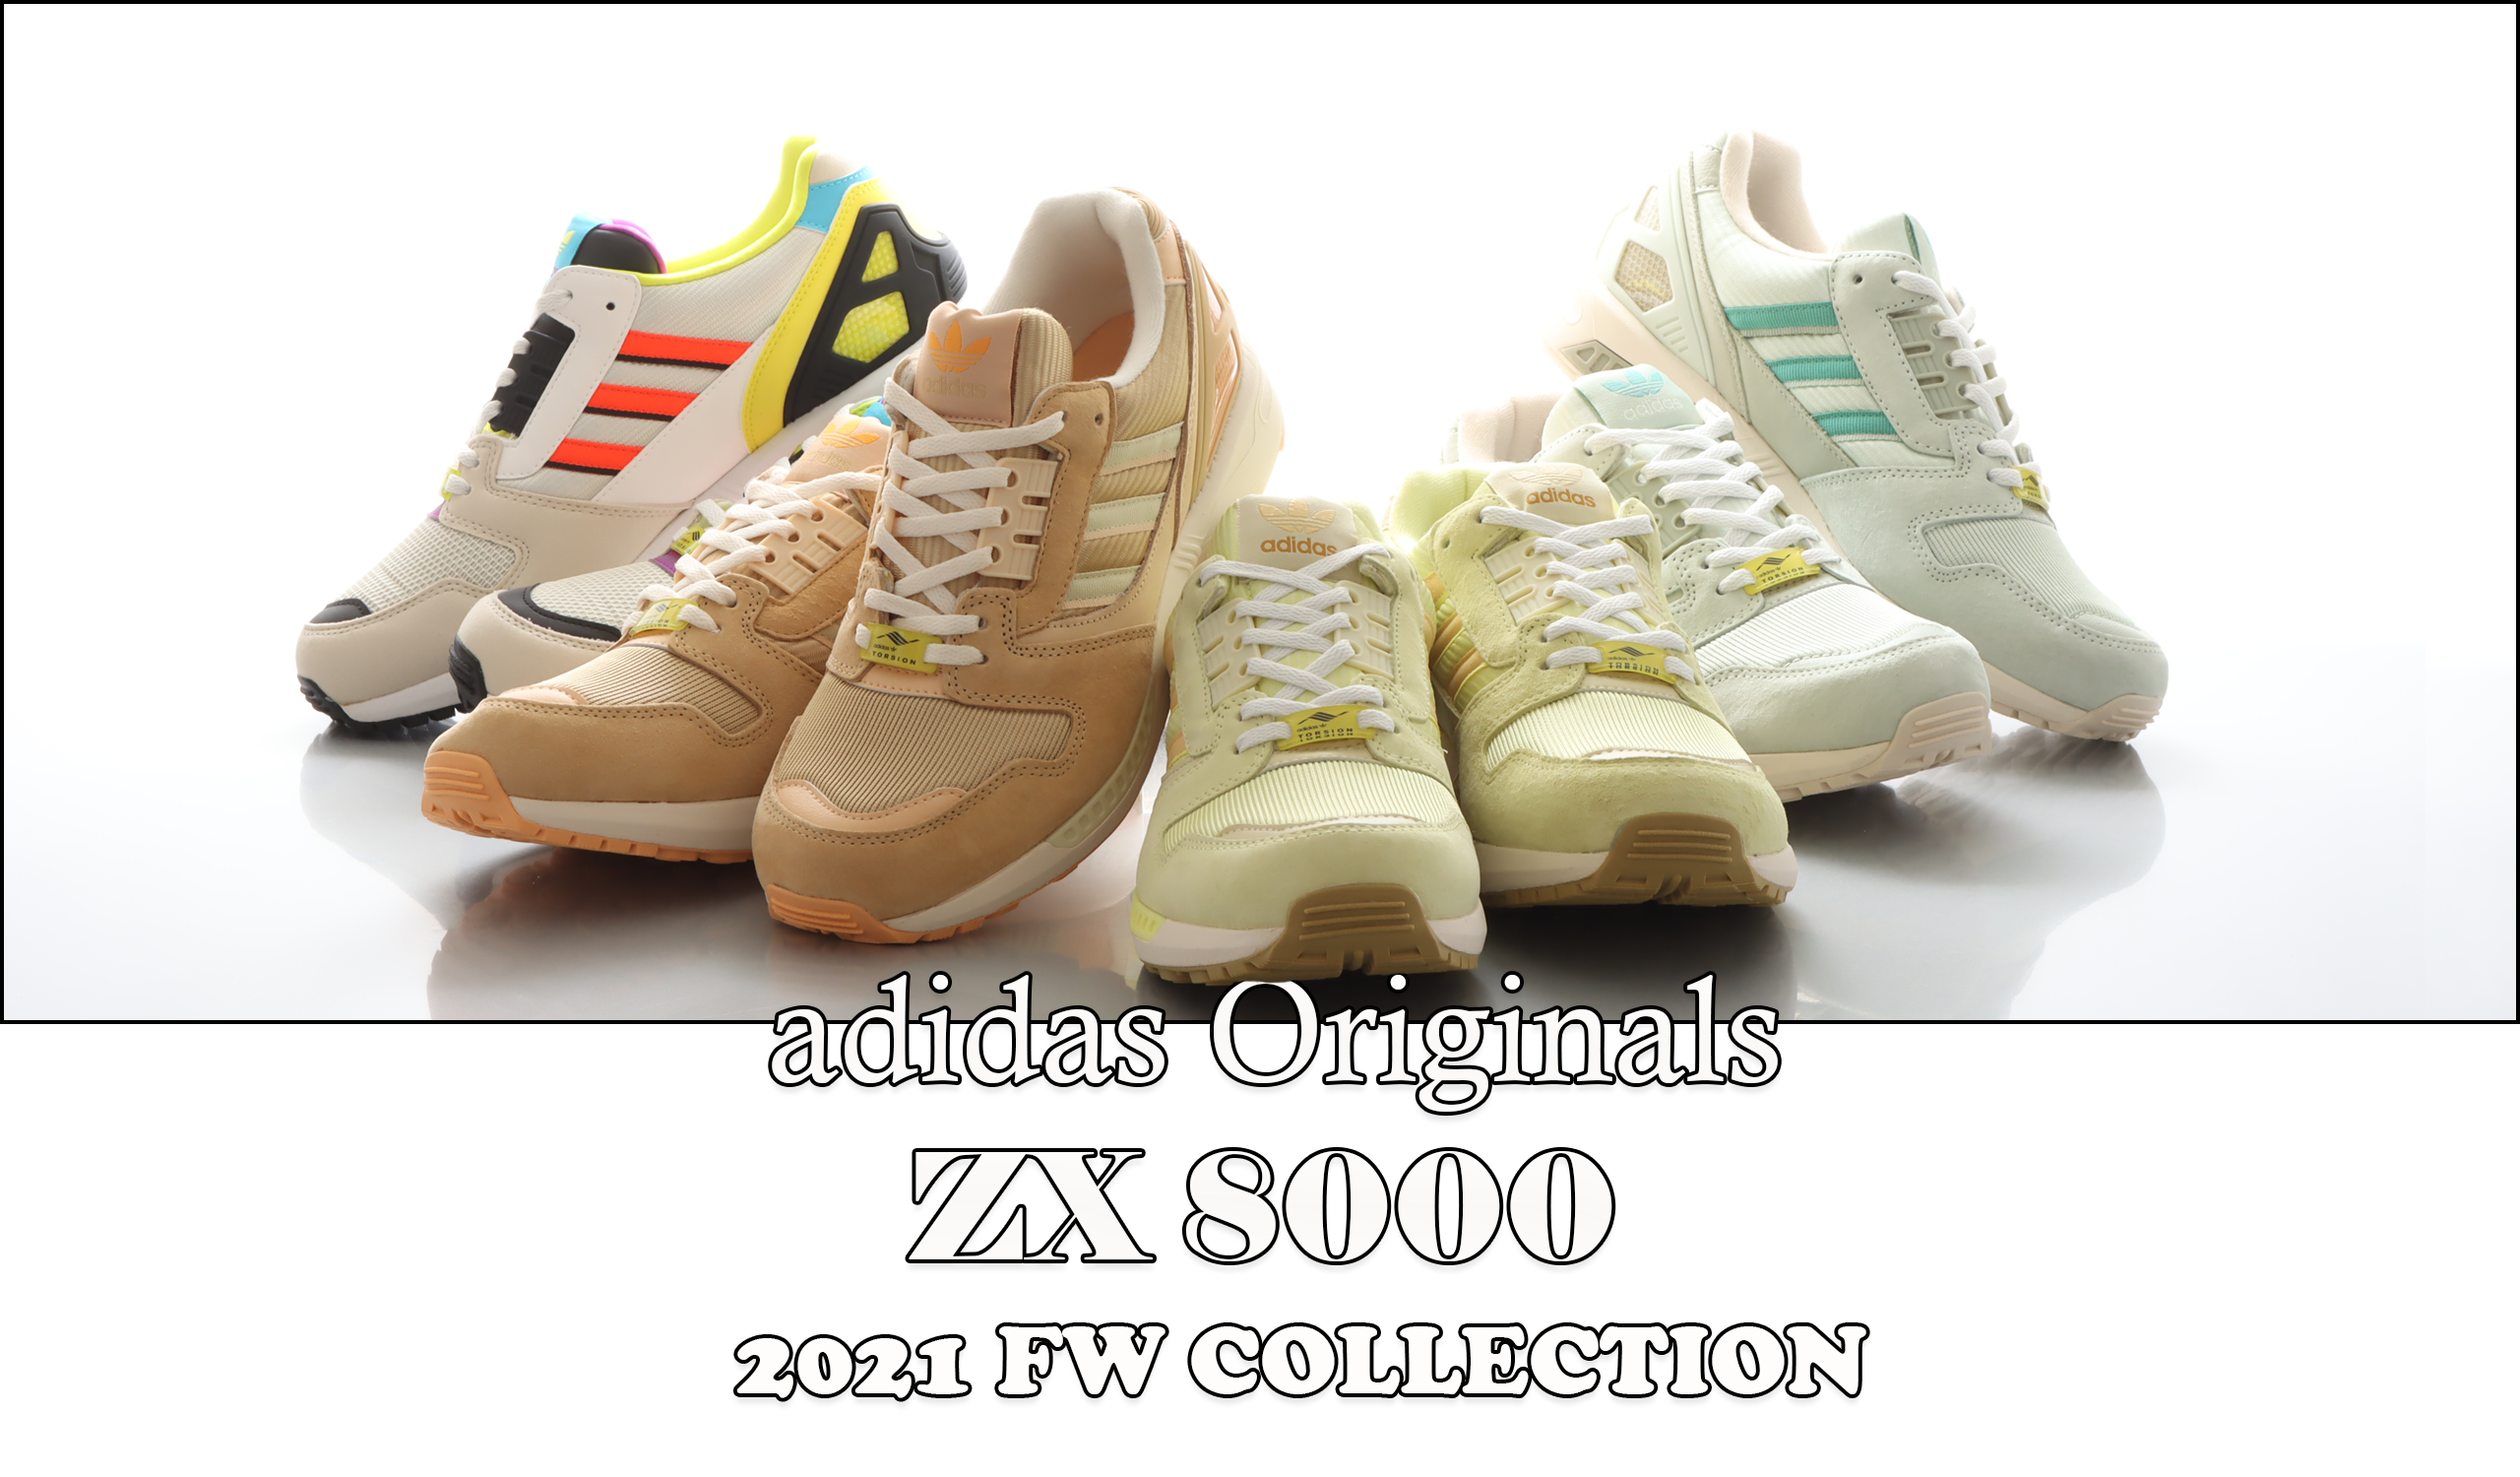 "adidas-zx8000-2021fw"